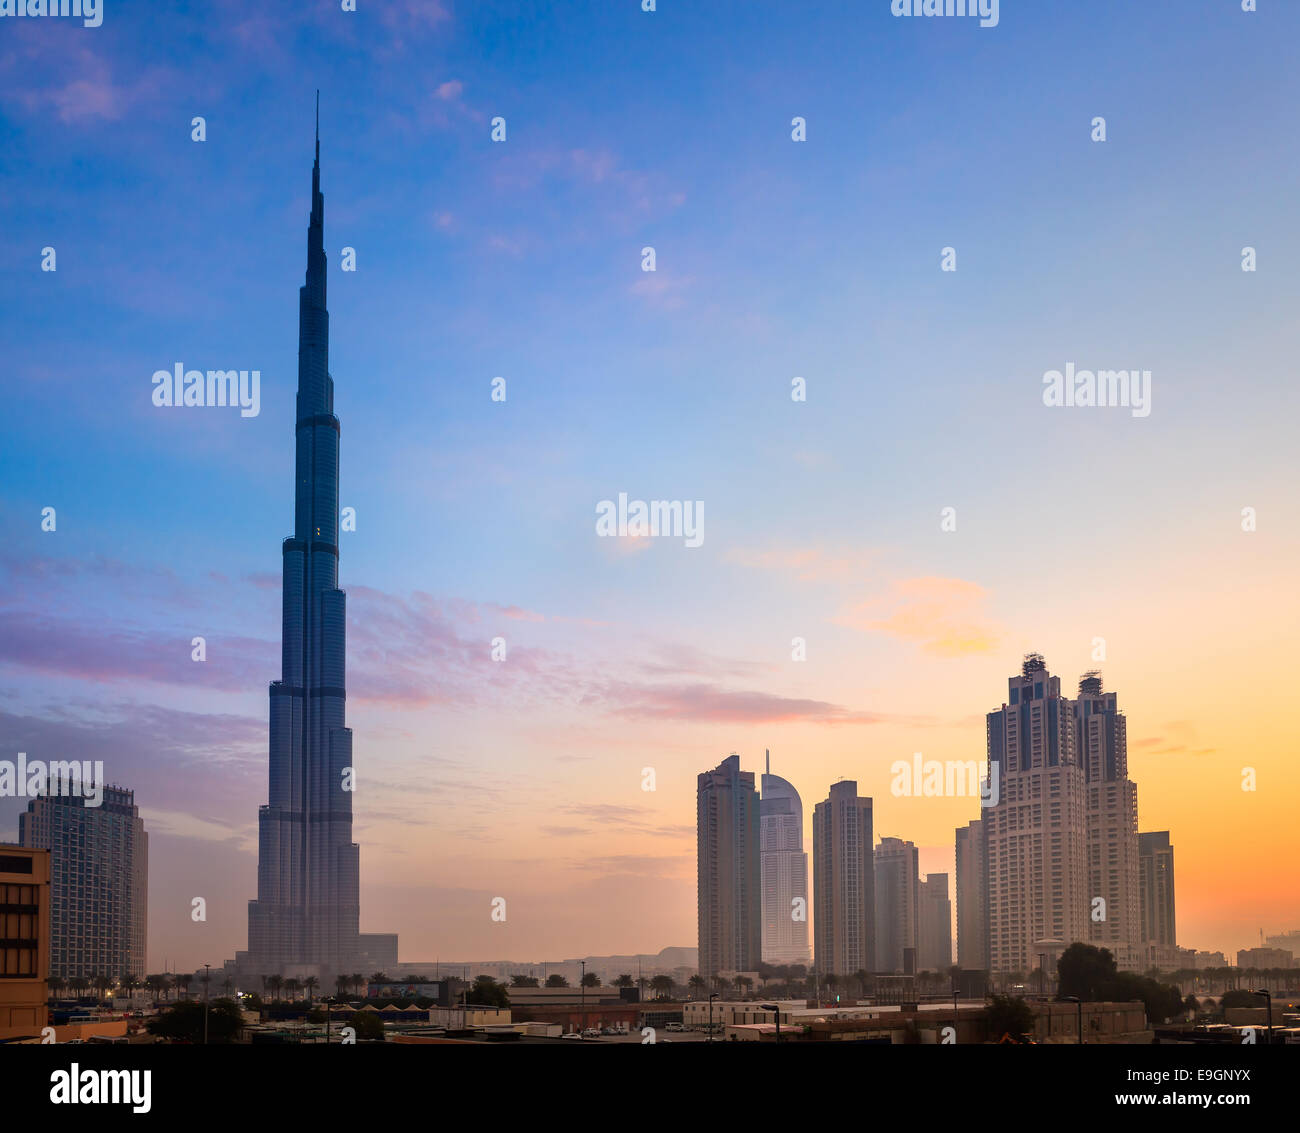 Dubai skyline with Burj Khaleefa the tallest building over the horizon. Stock Photo